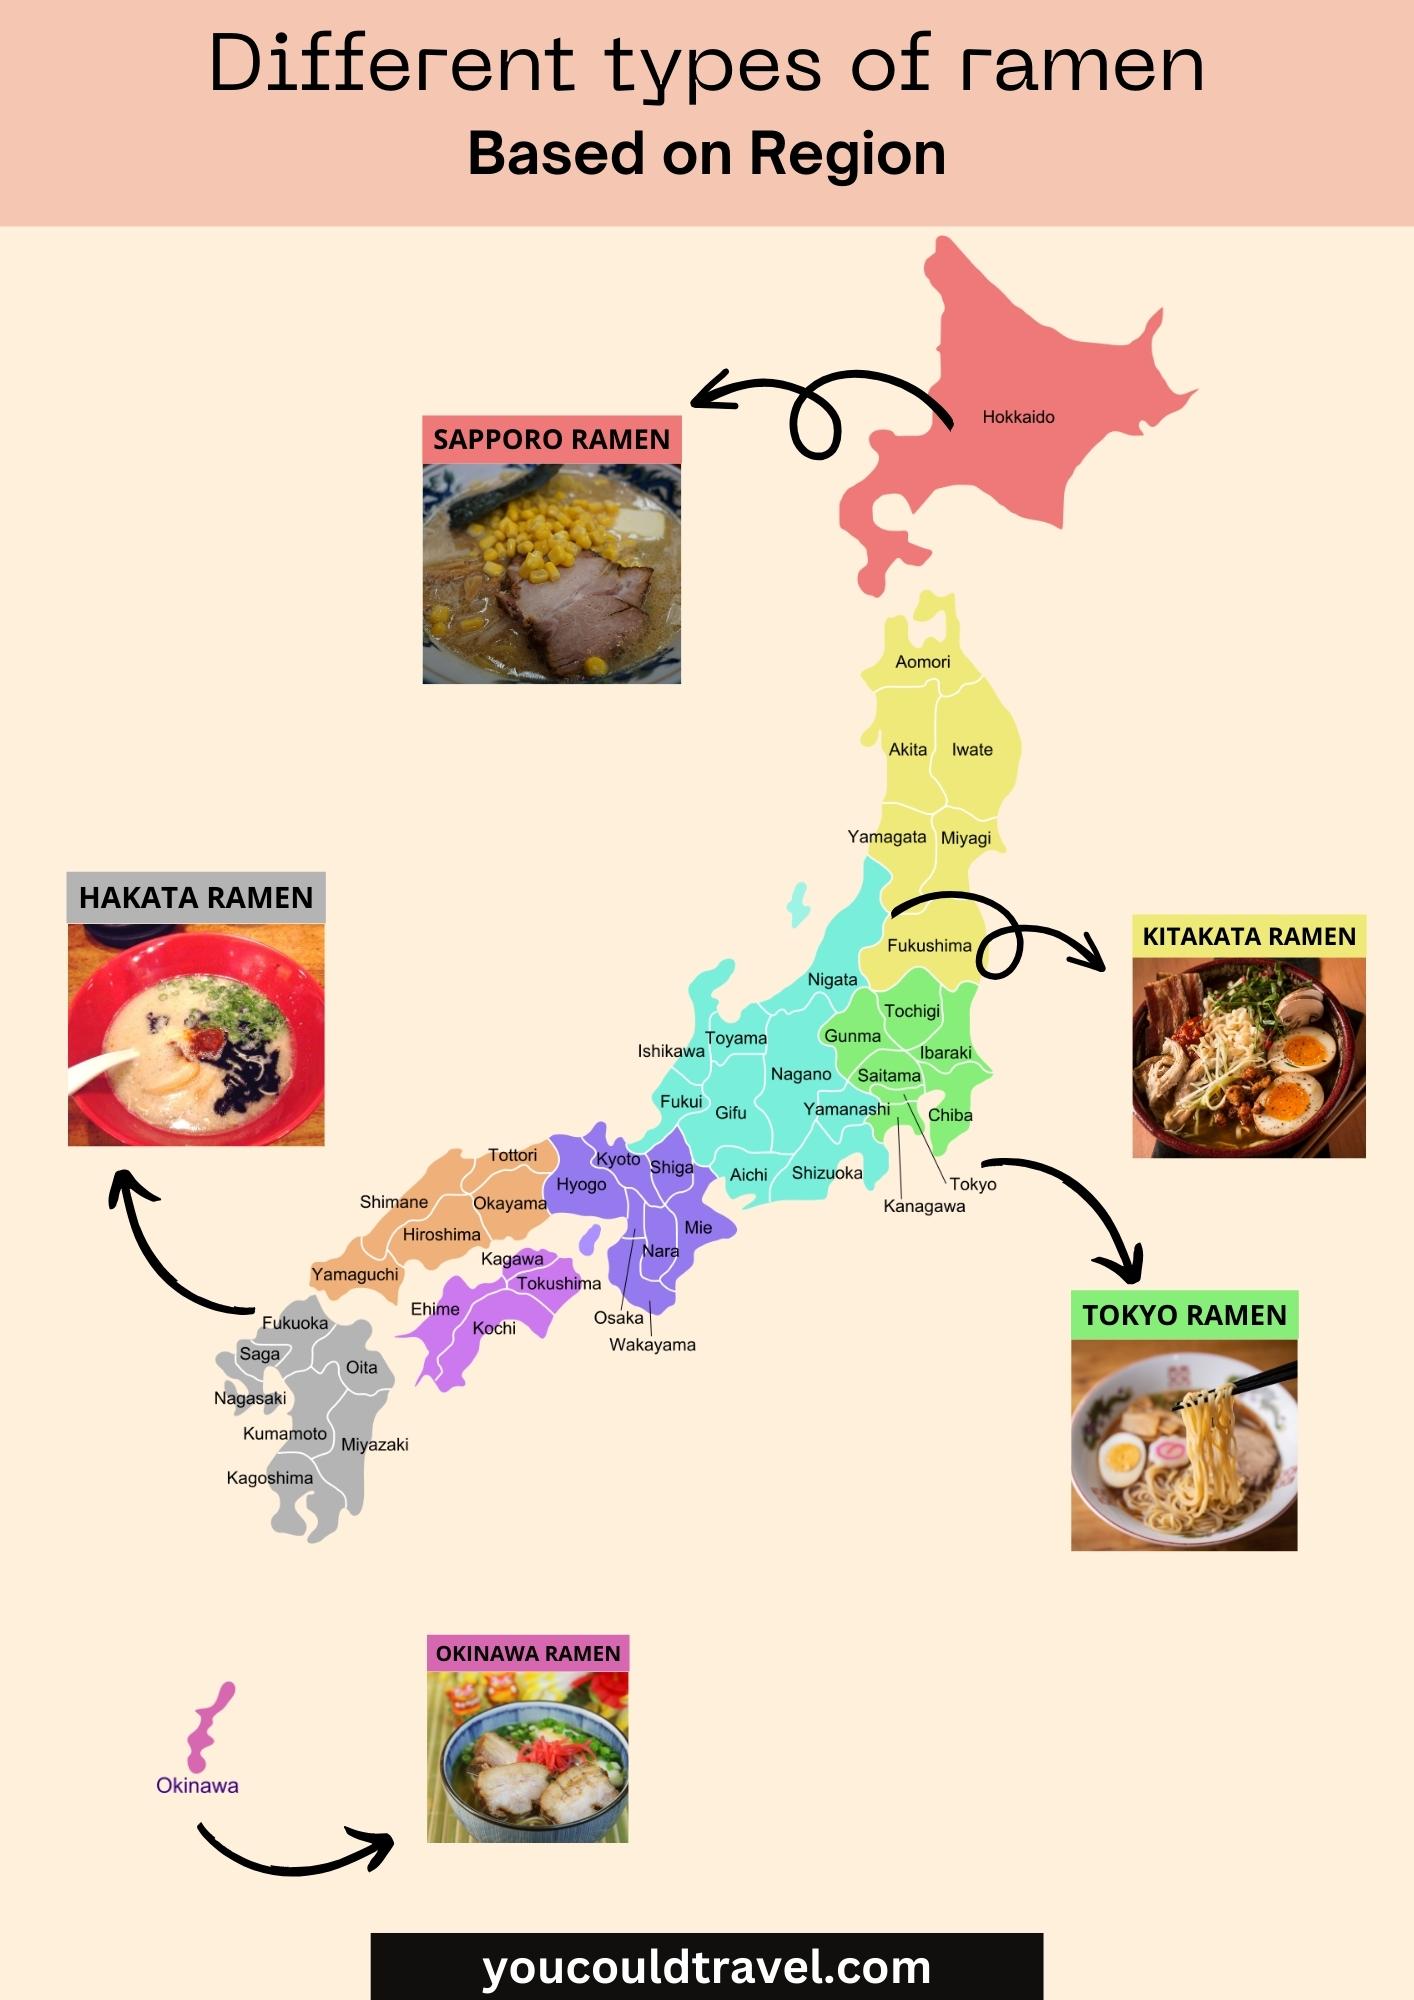 Types of ramen based on region